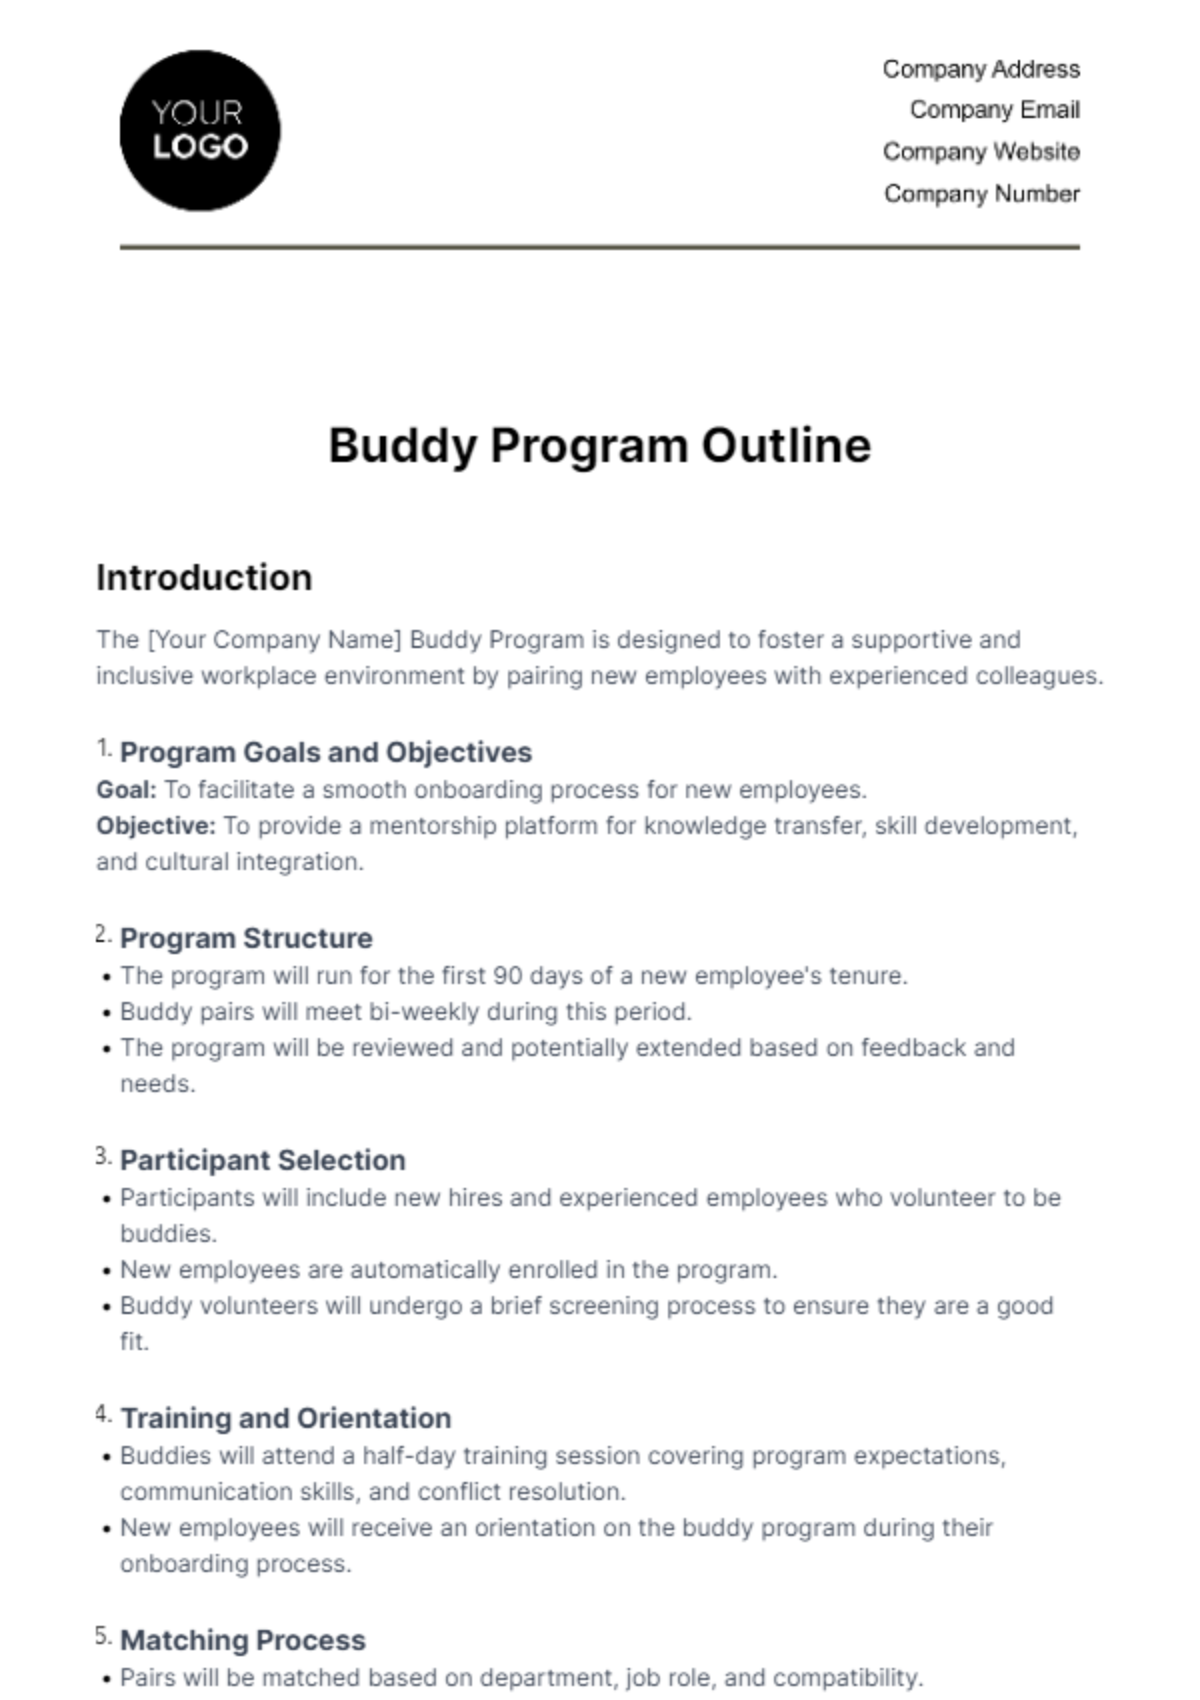 Buddy Program Outline HR Template